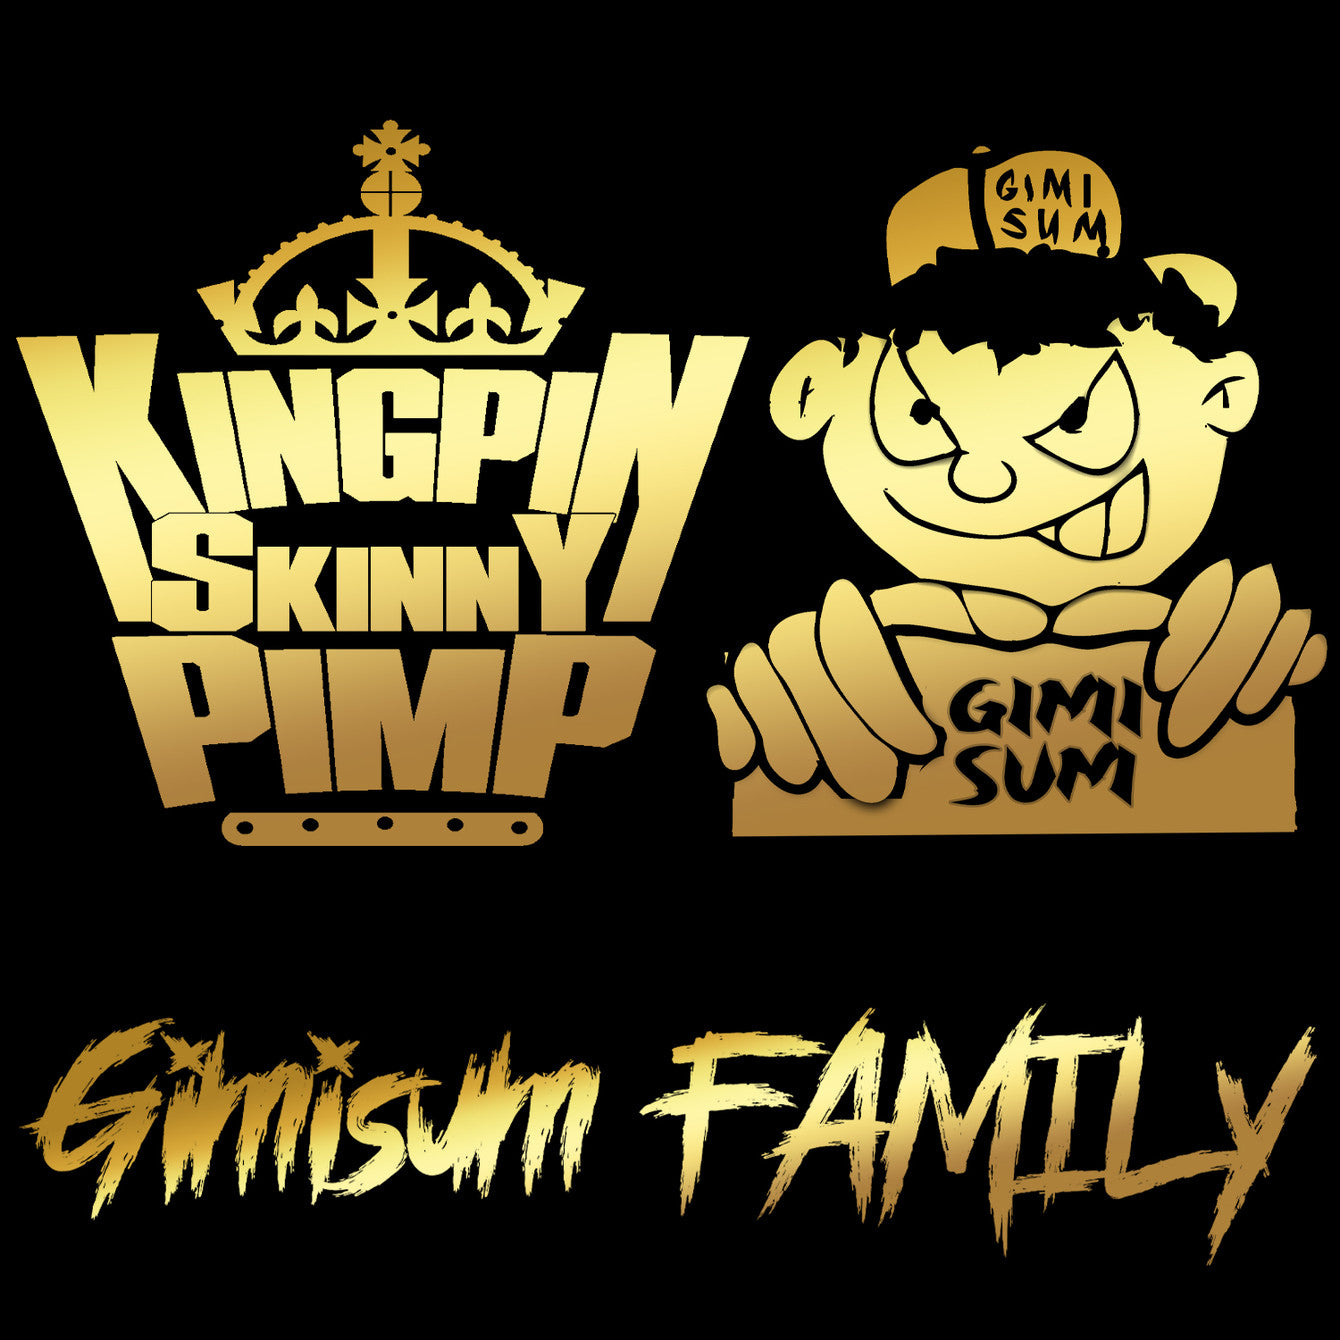 Kingpin Skinny Pimp's Official Website/Gimisum Family Studios